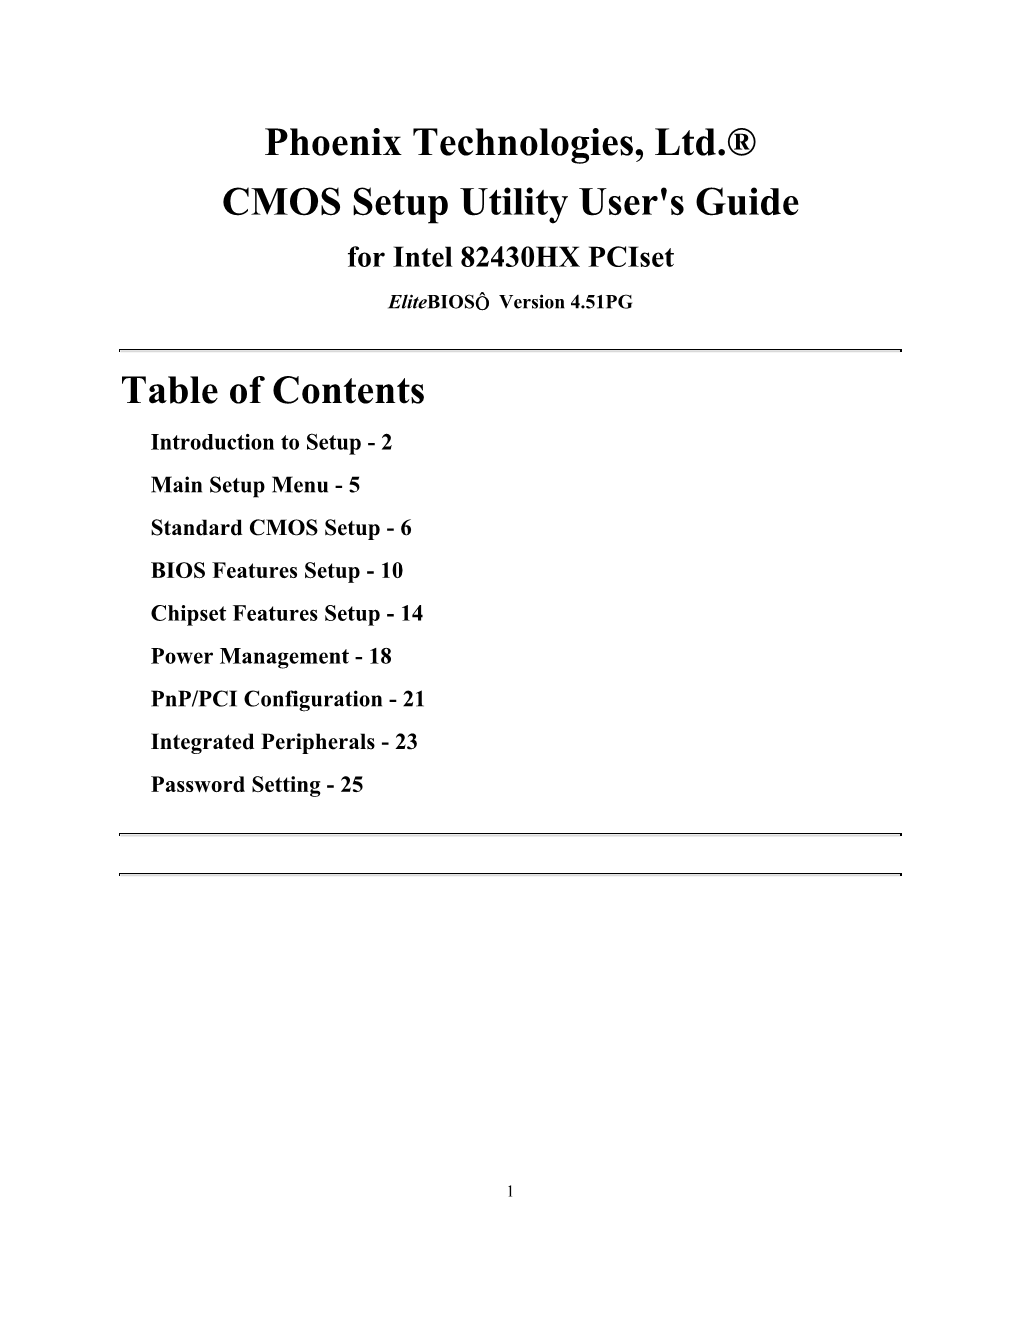 Phoenix Technologies, Ltd.® CMOS Setup Utility User's Guide for Intel 82430HX Pciset